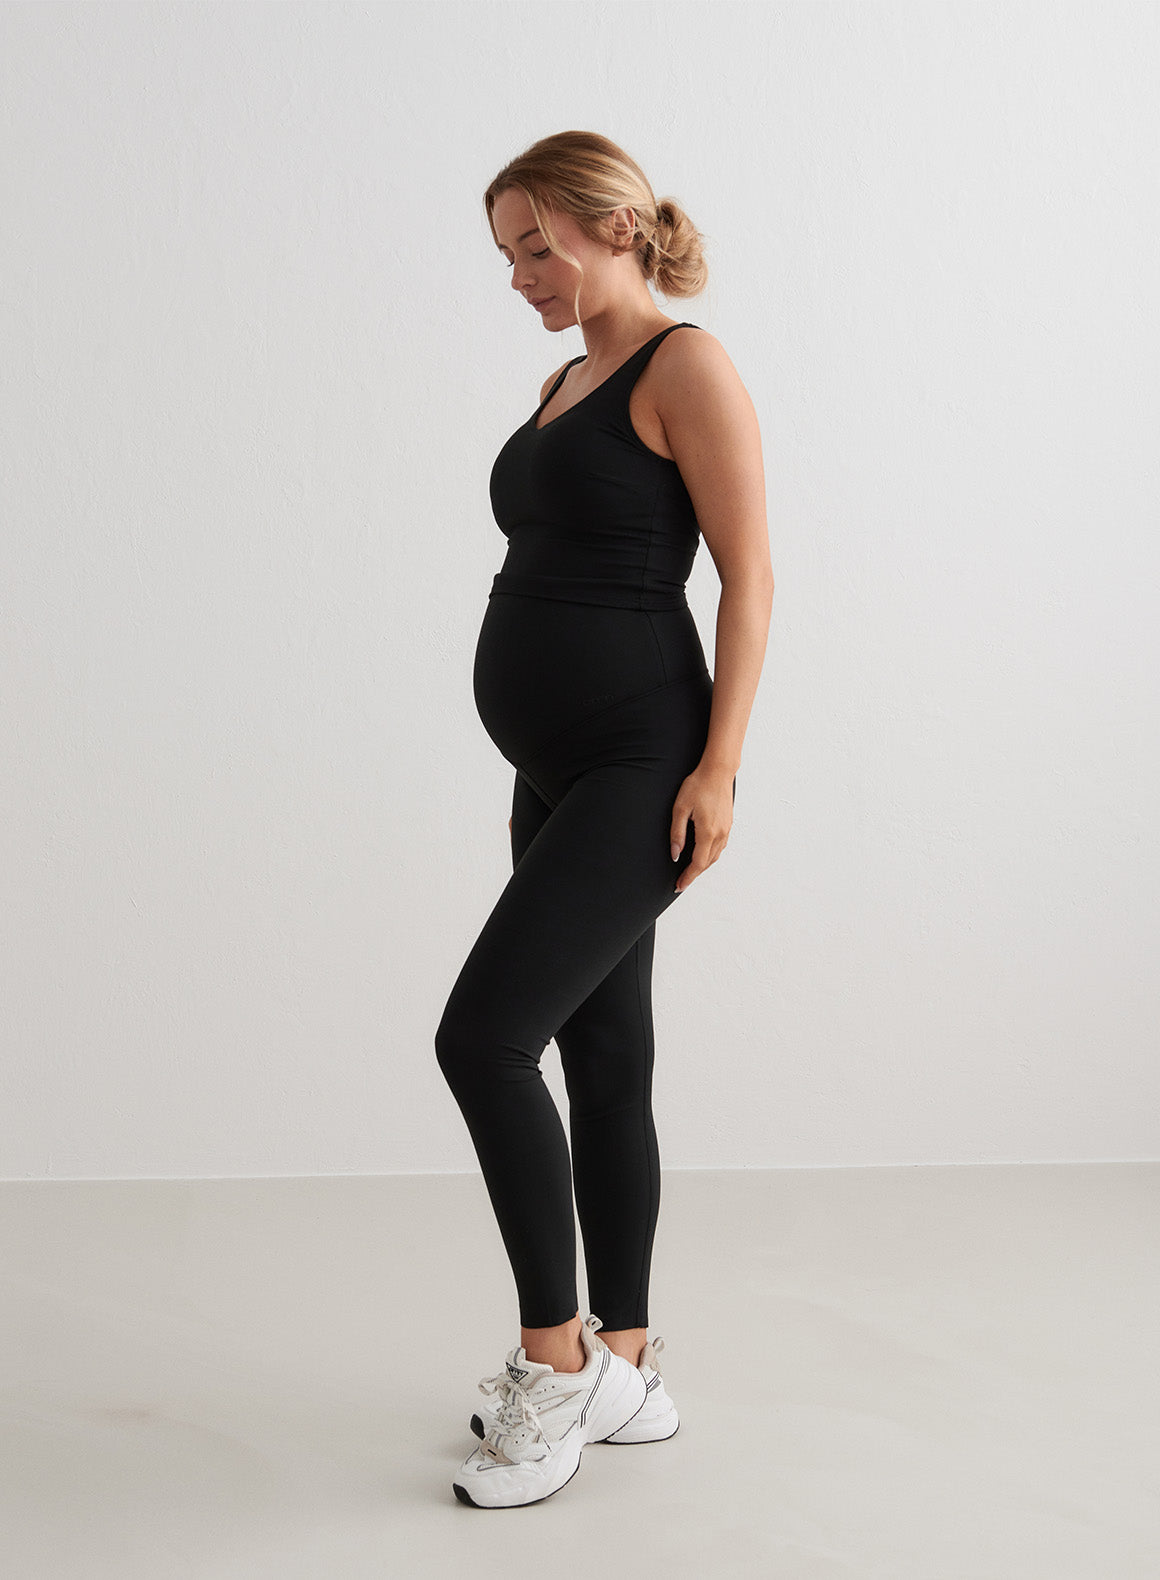 AIM'N Aim High Maternity Tights - Leggings & Tights 